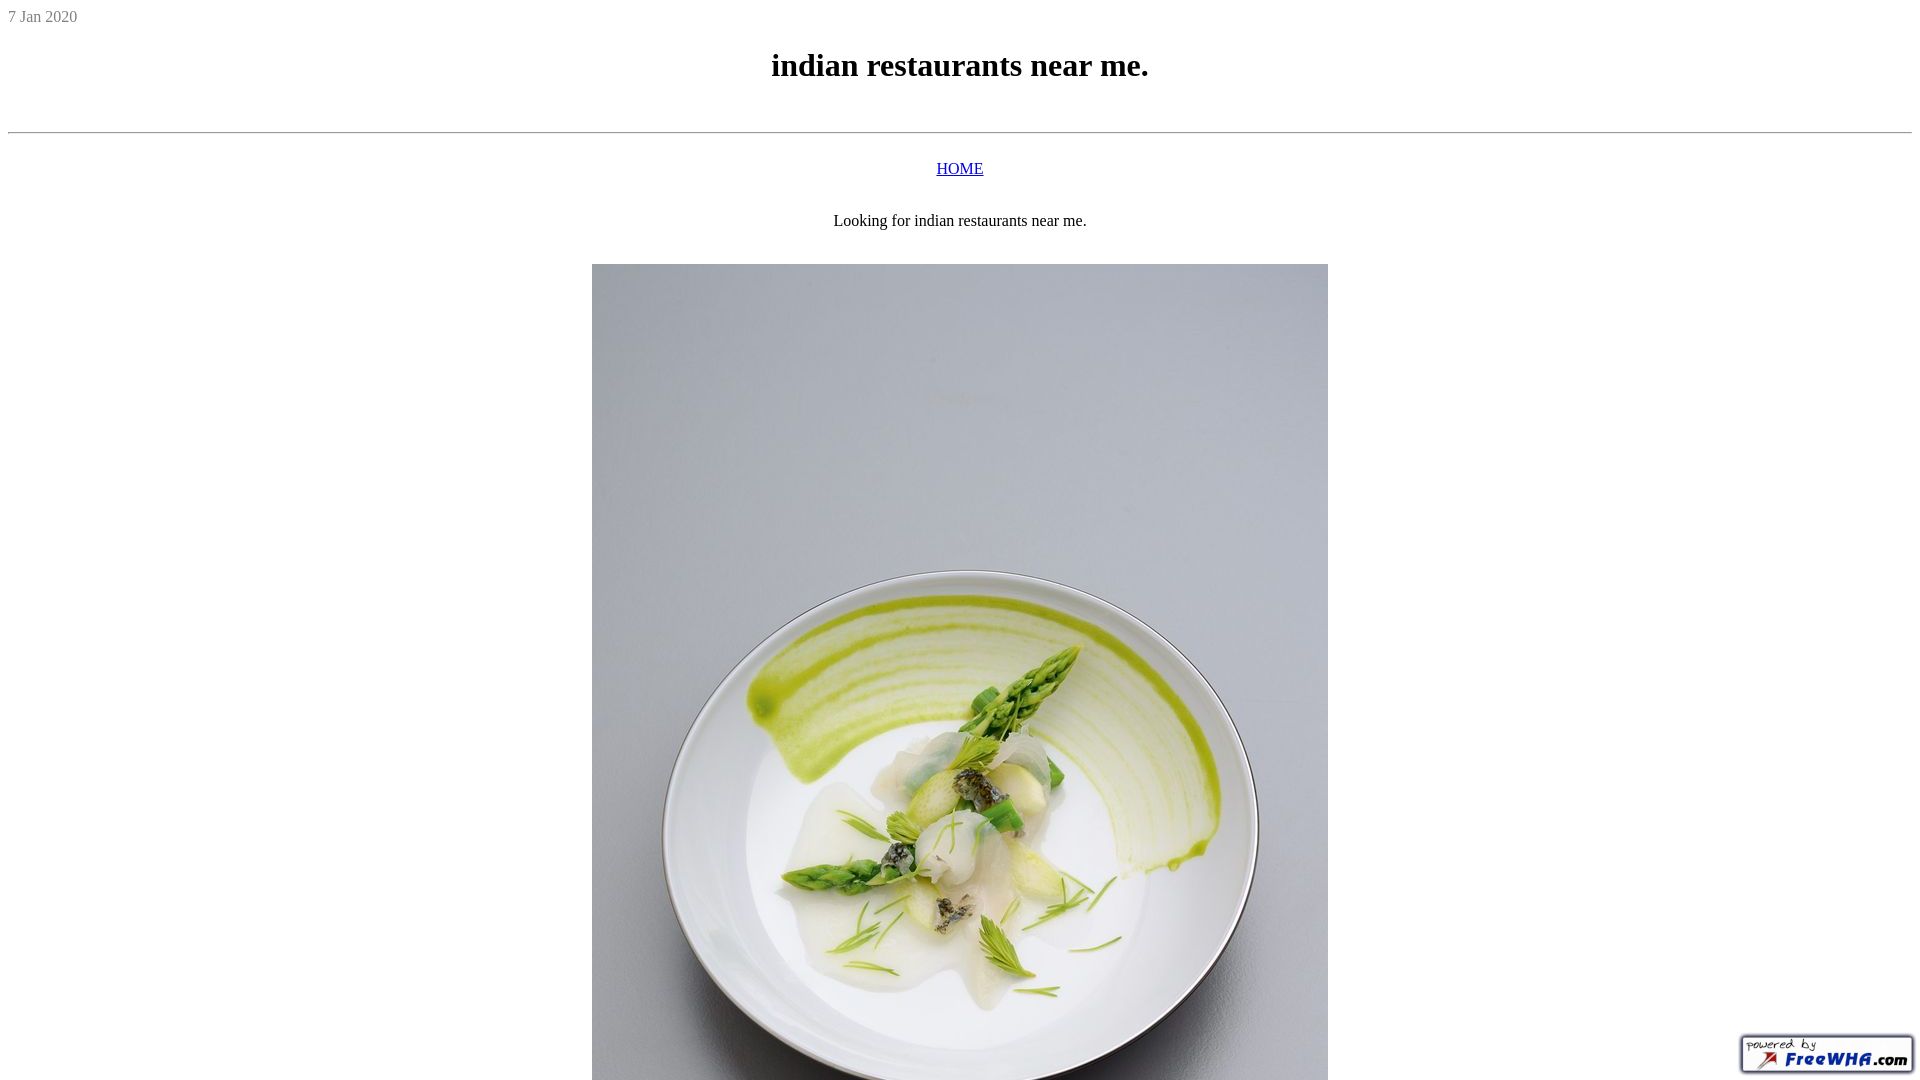 Estado web indianrestaurantsnearme.ueuo.com está   ONLINE